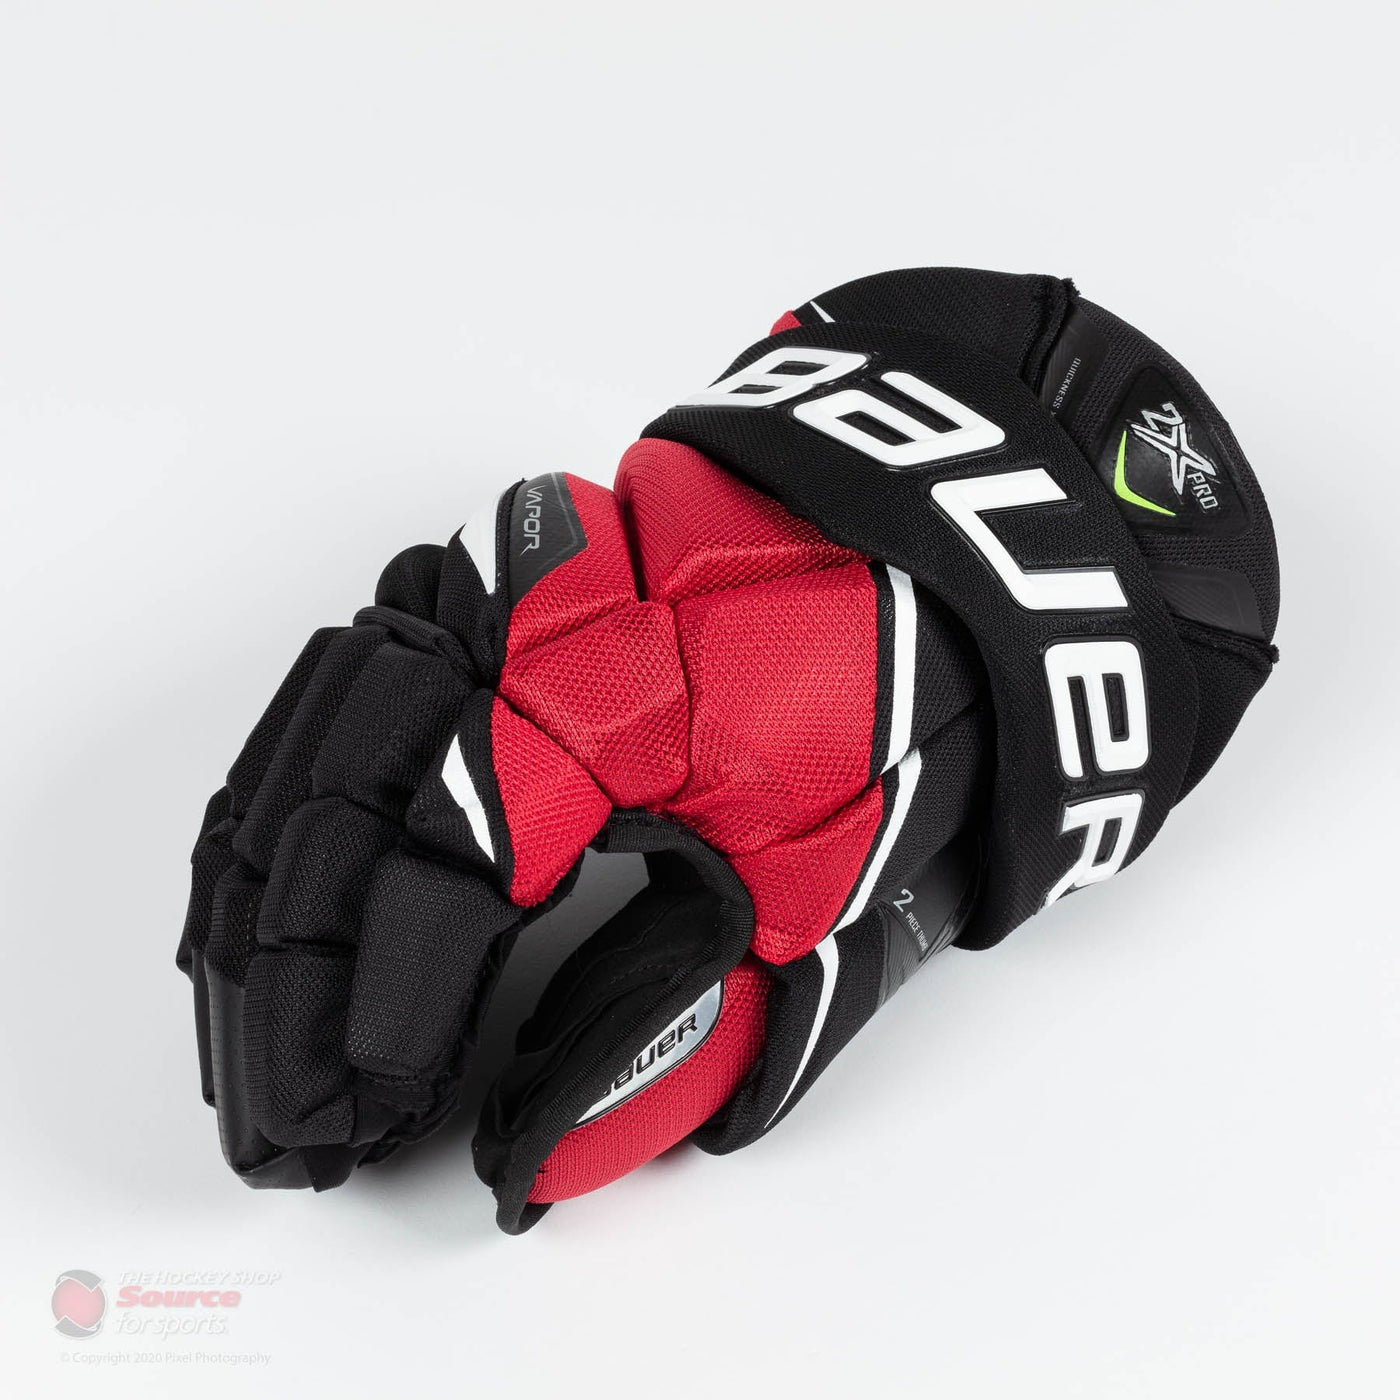 Bauer Vapor 2X Pro Senior Hockey Gloves